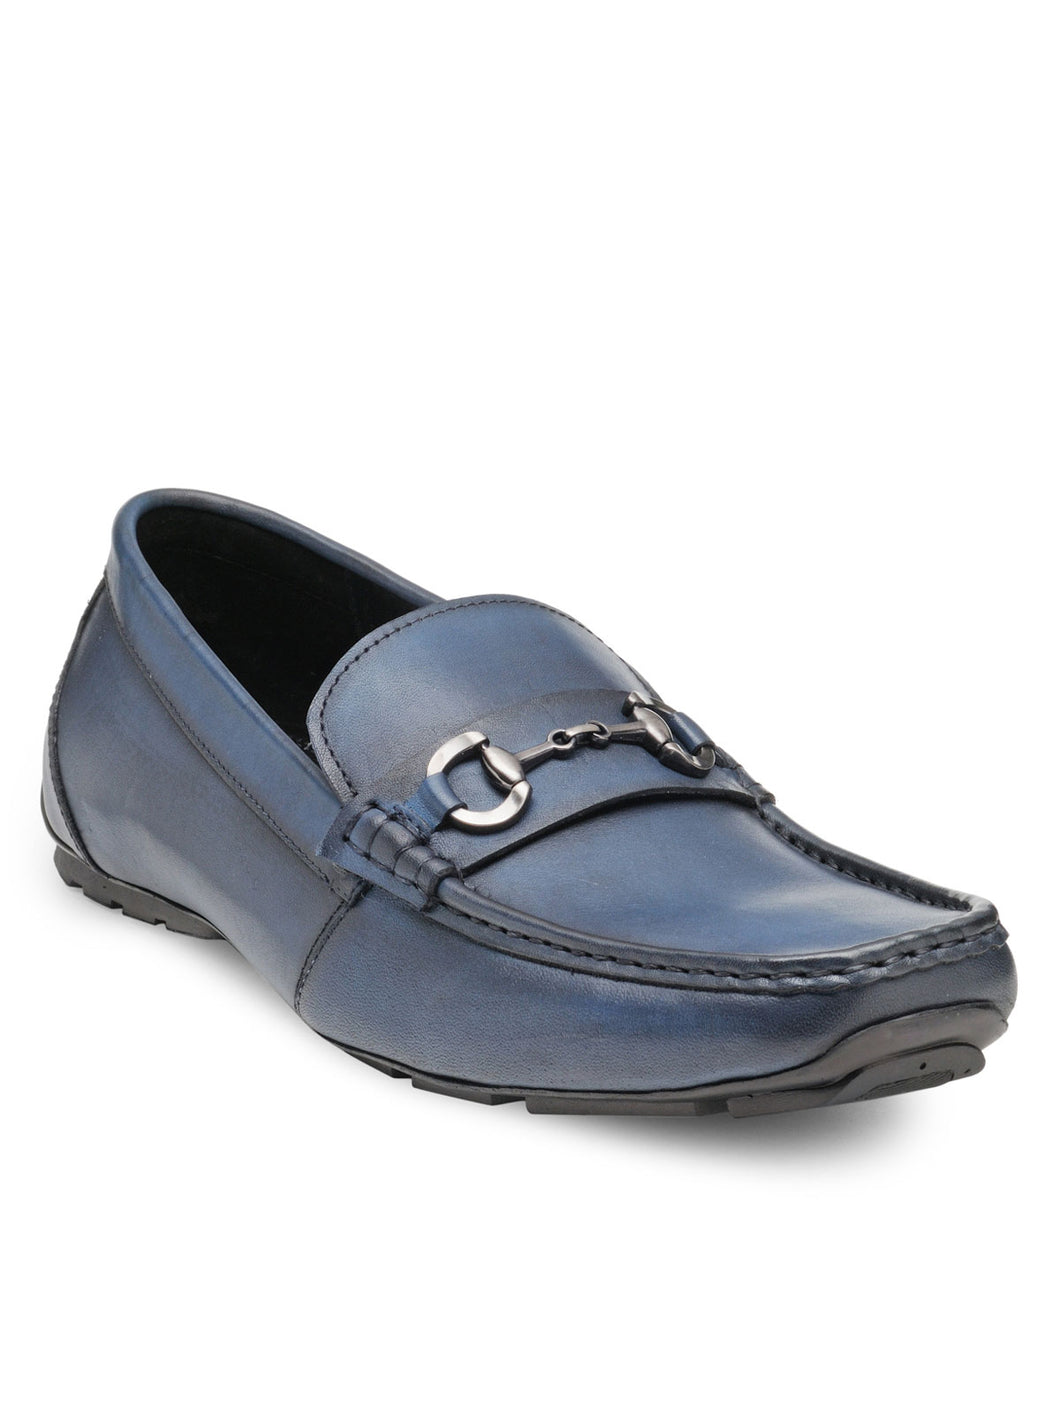 Teakwood Leather Men's Navy Blue Slip-ons Shoes